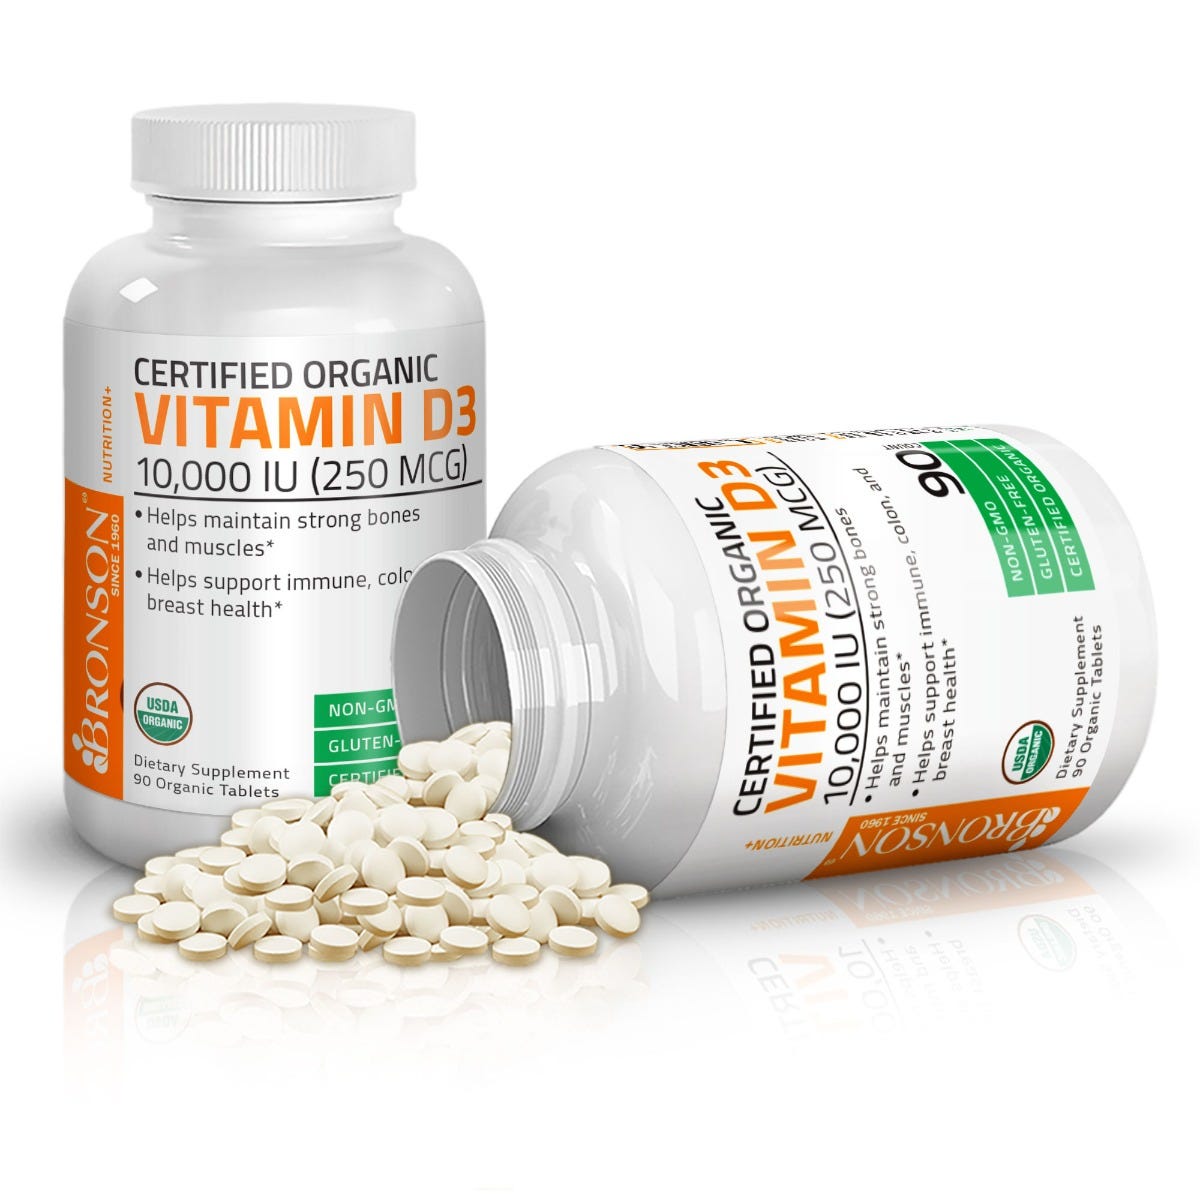 Vitamin D3 High Dose USDA Certified Organic - 10,000 IU view 4 of 6